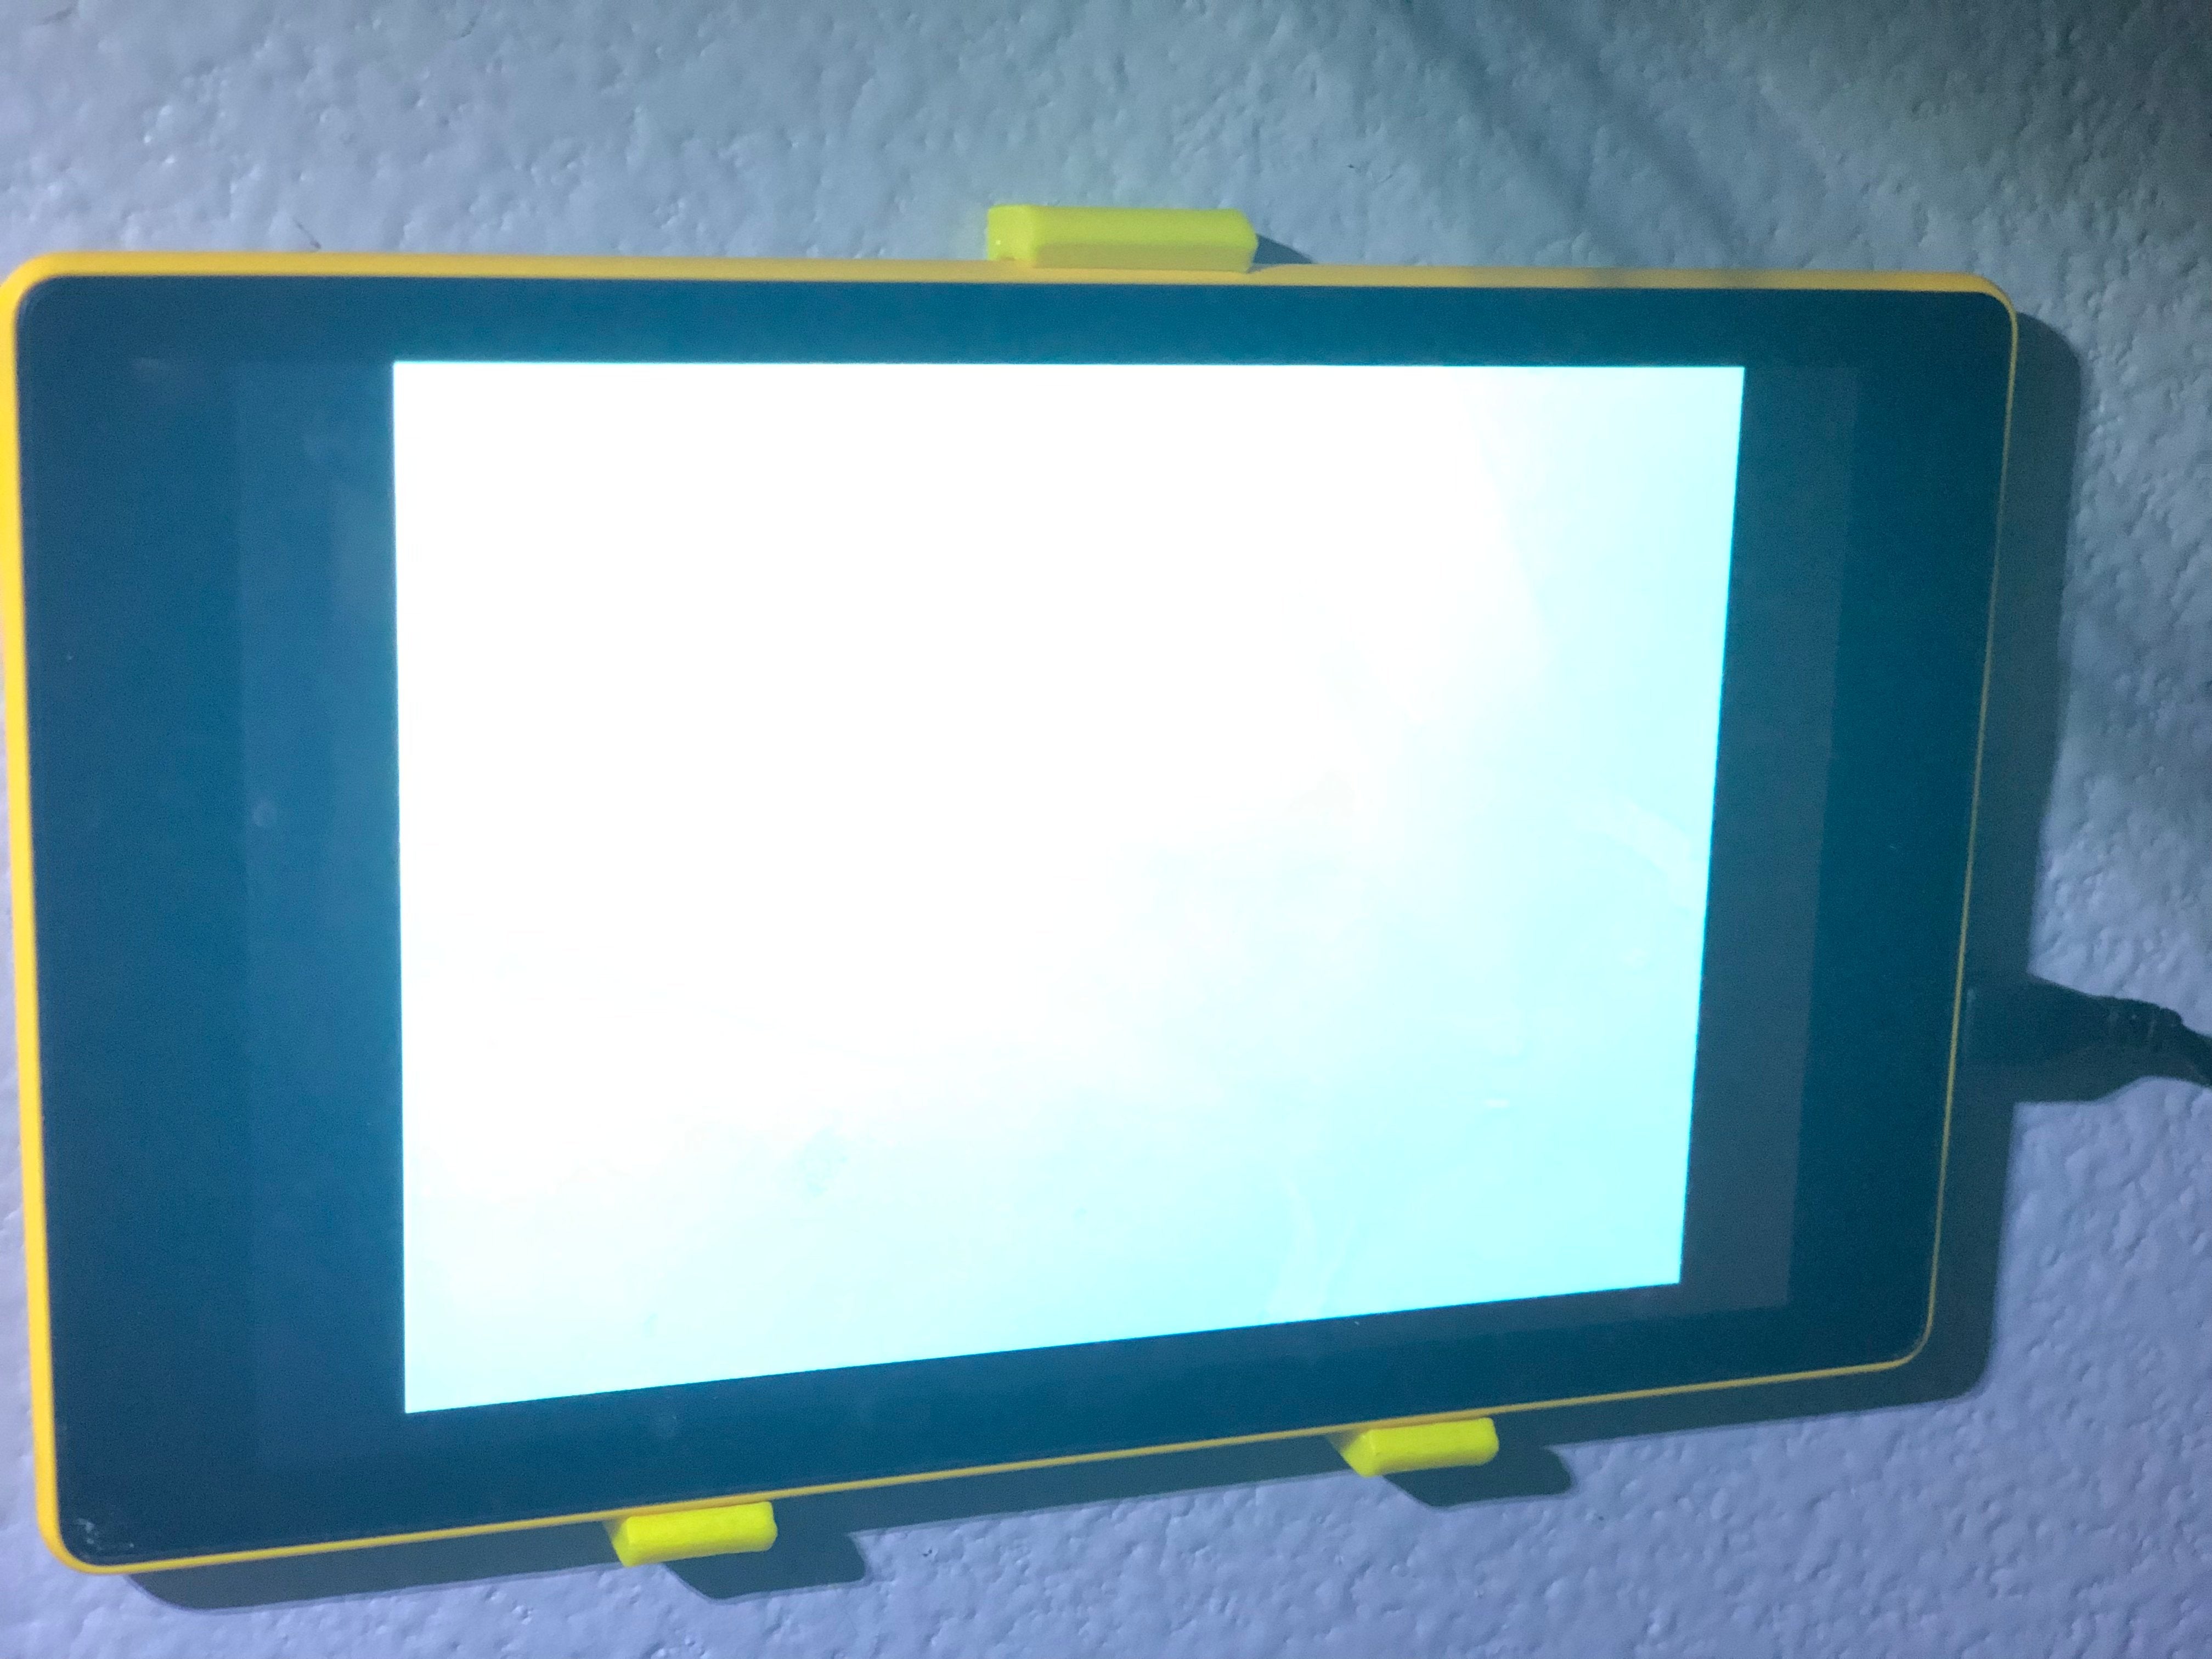 Soporte de pared para tableta Fire HD 8